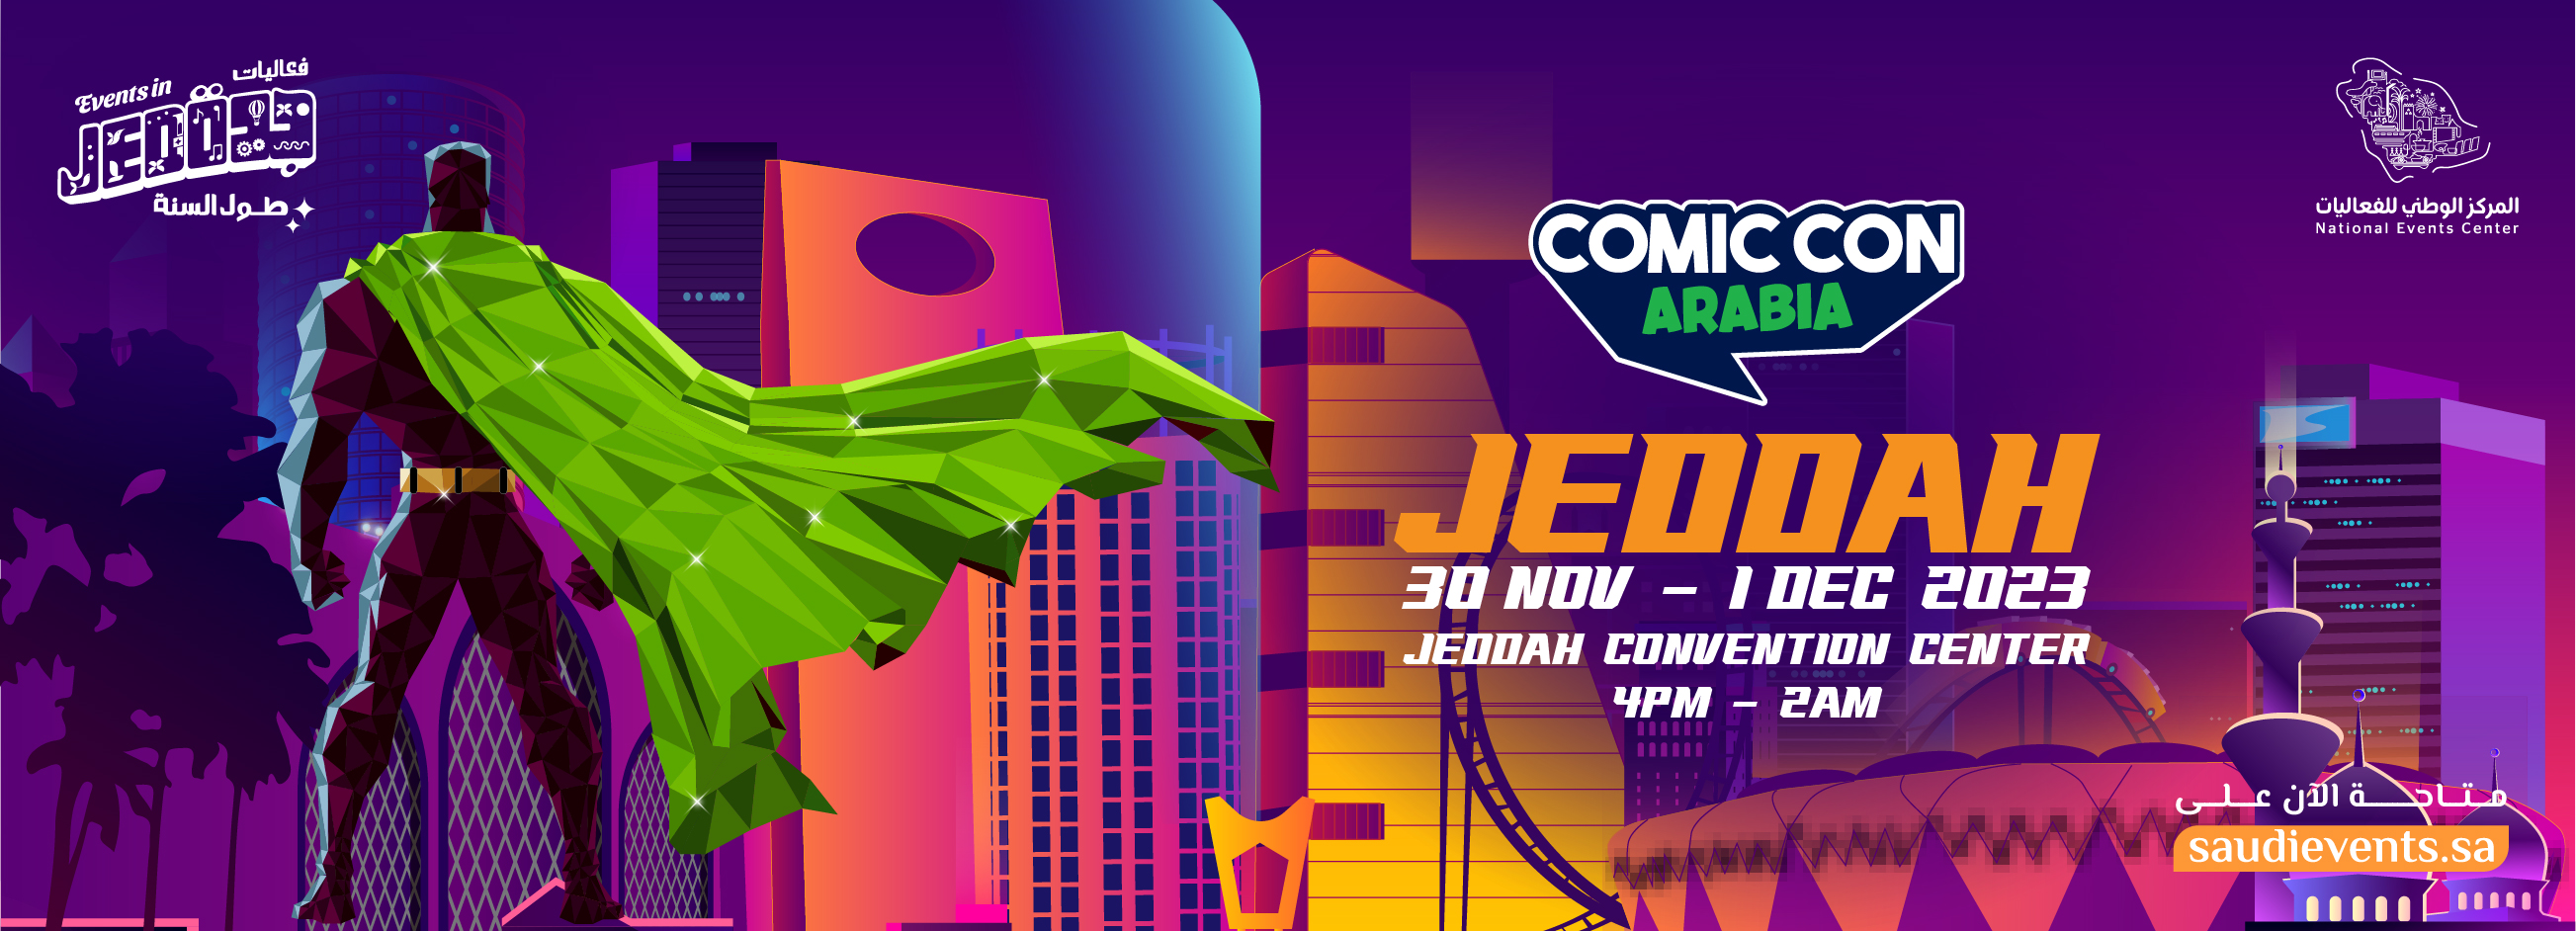 Comic Con Arabia in Jeddah, Jeddah, Makkah, Saudi Arabia